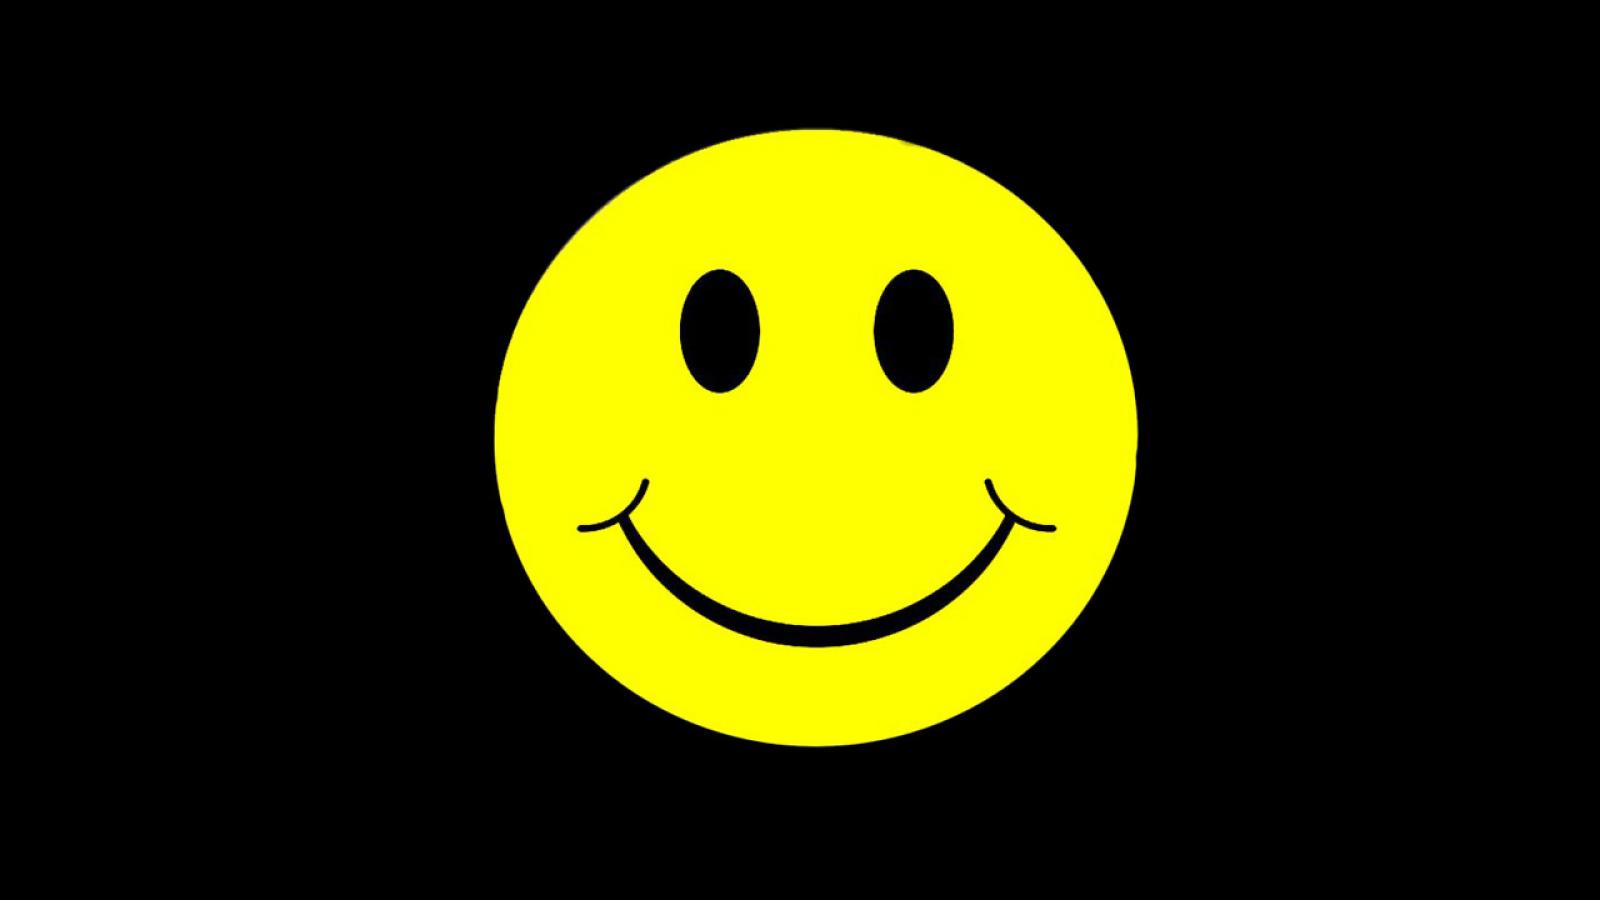 happy smiley face faces black background acid house Q2CD 1600x900